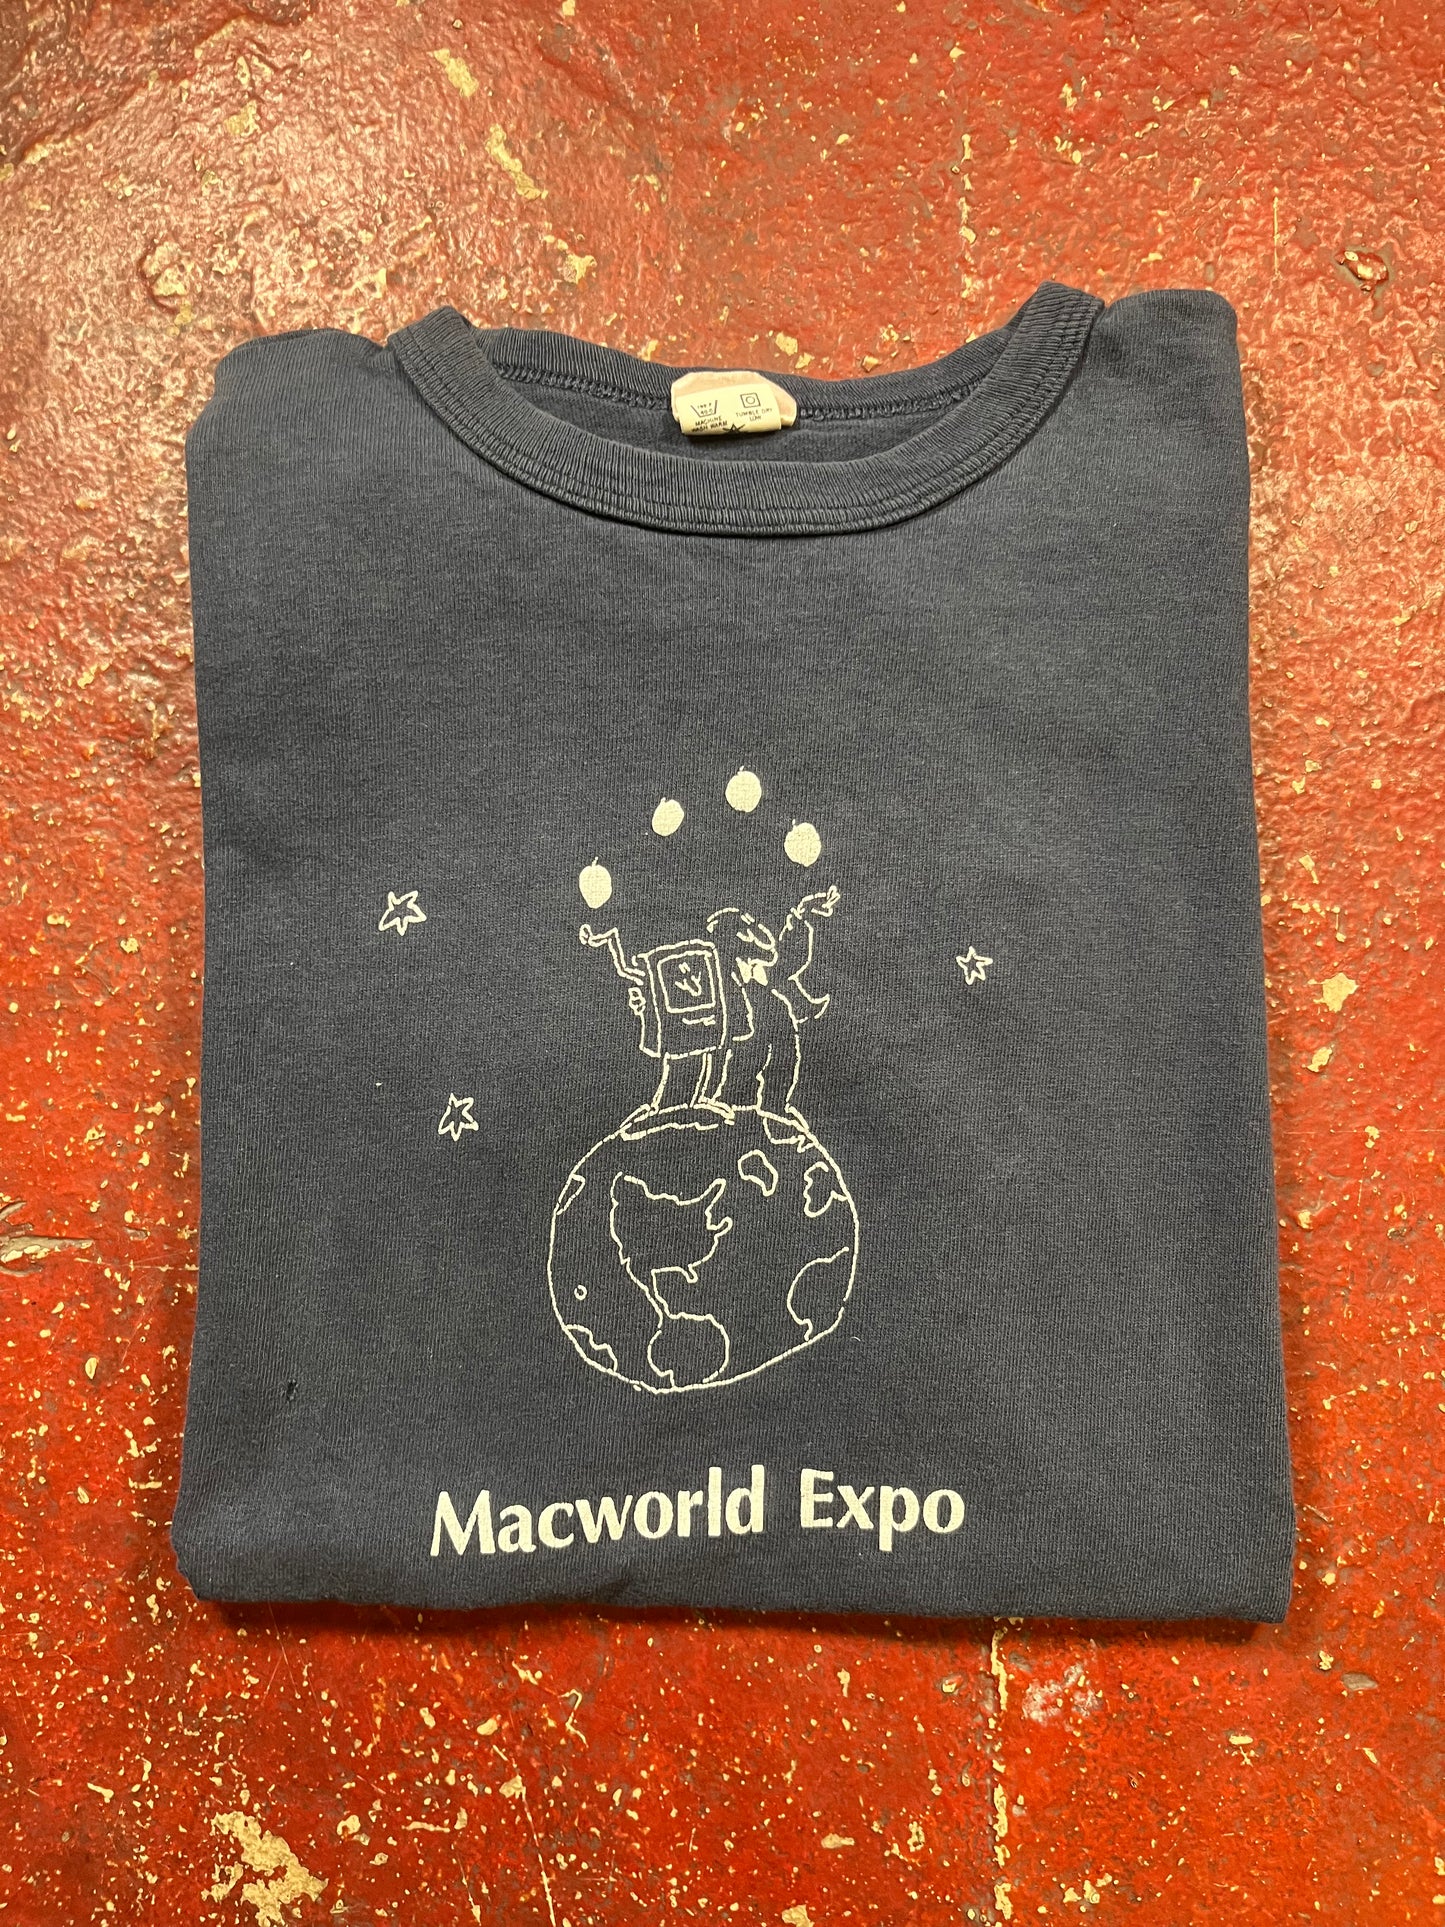 1988 Macworld Expo Tee